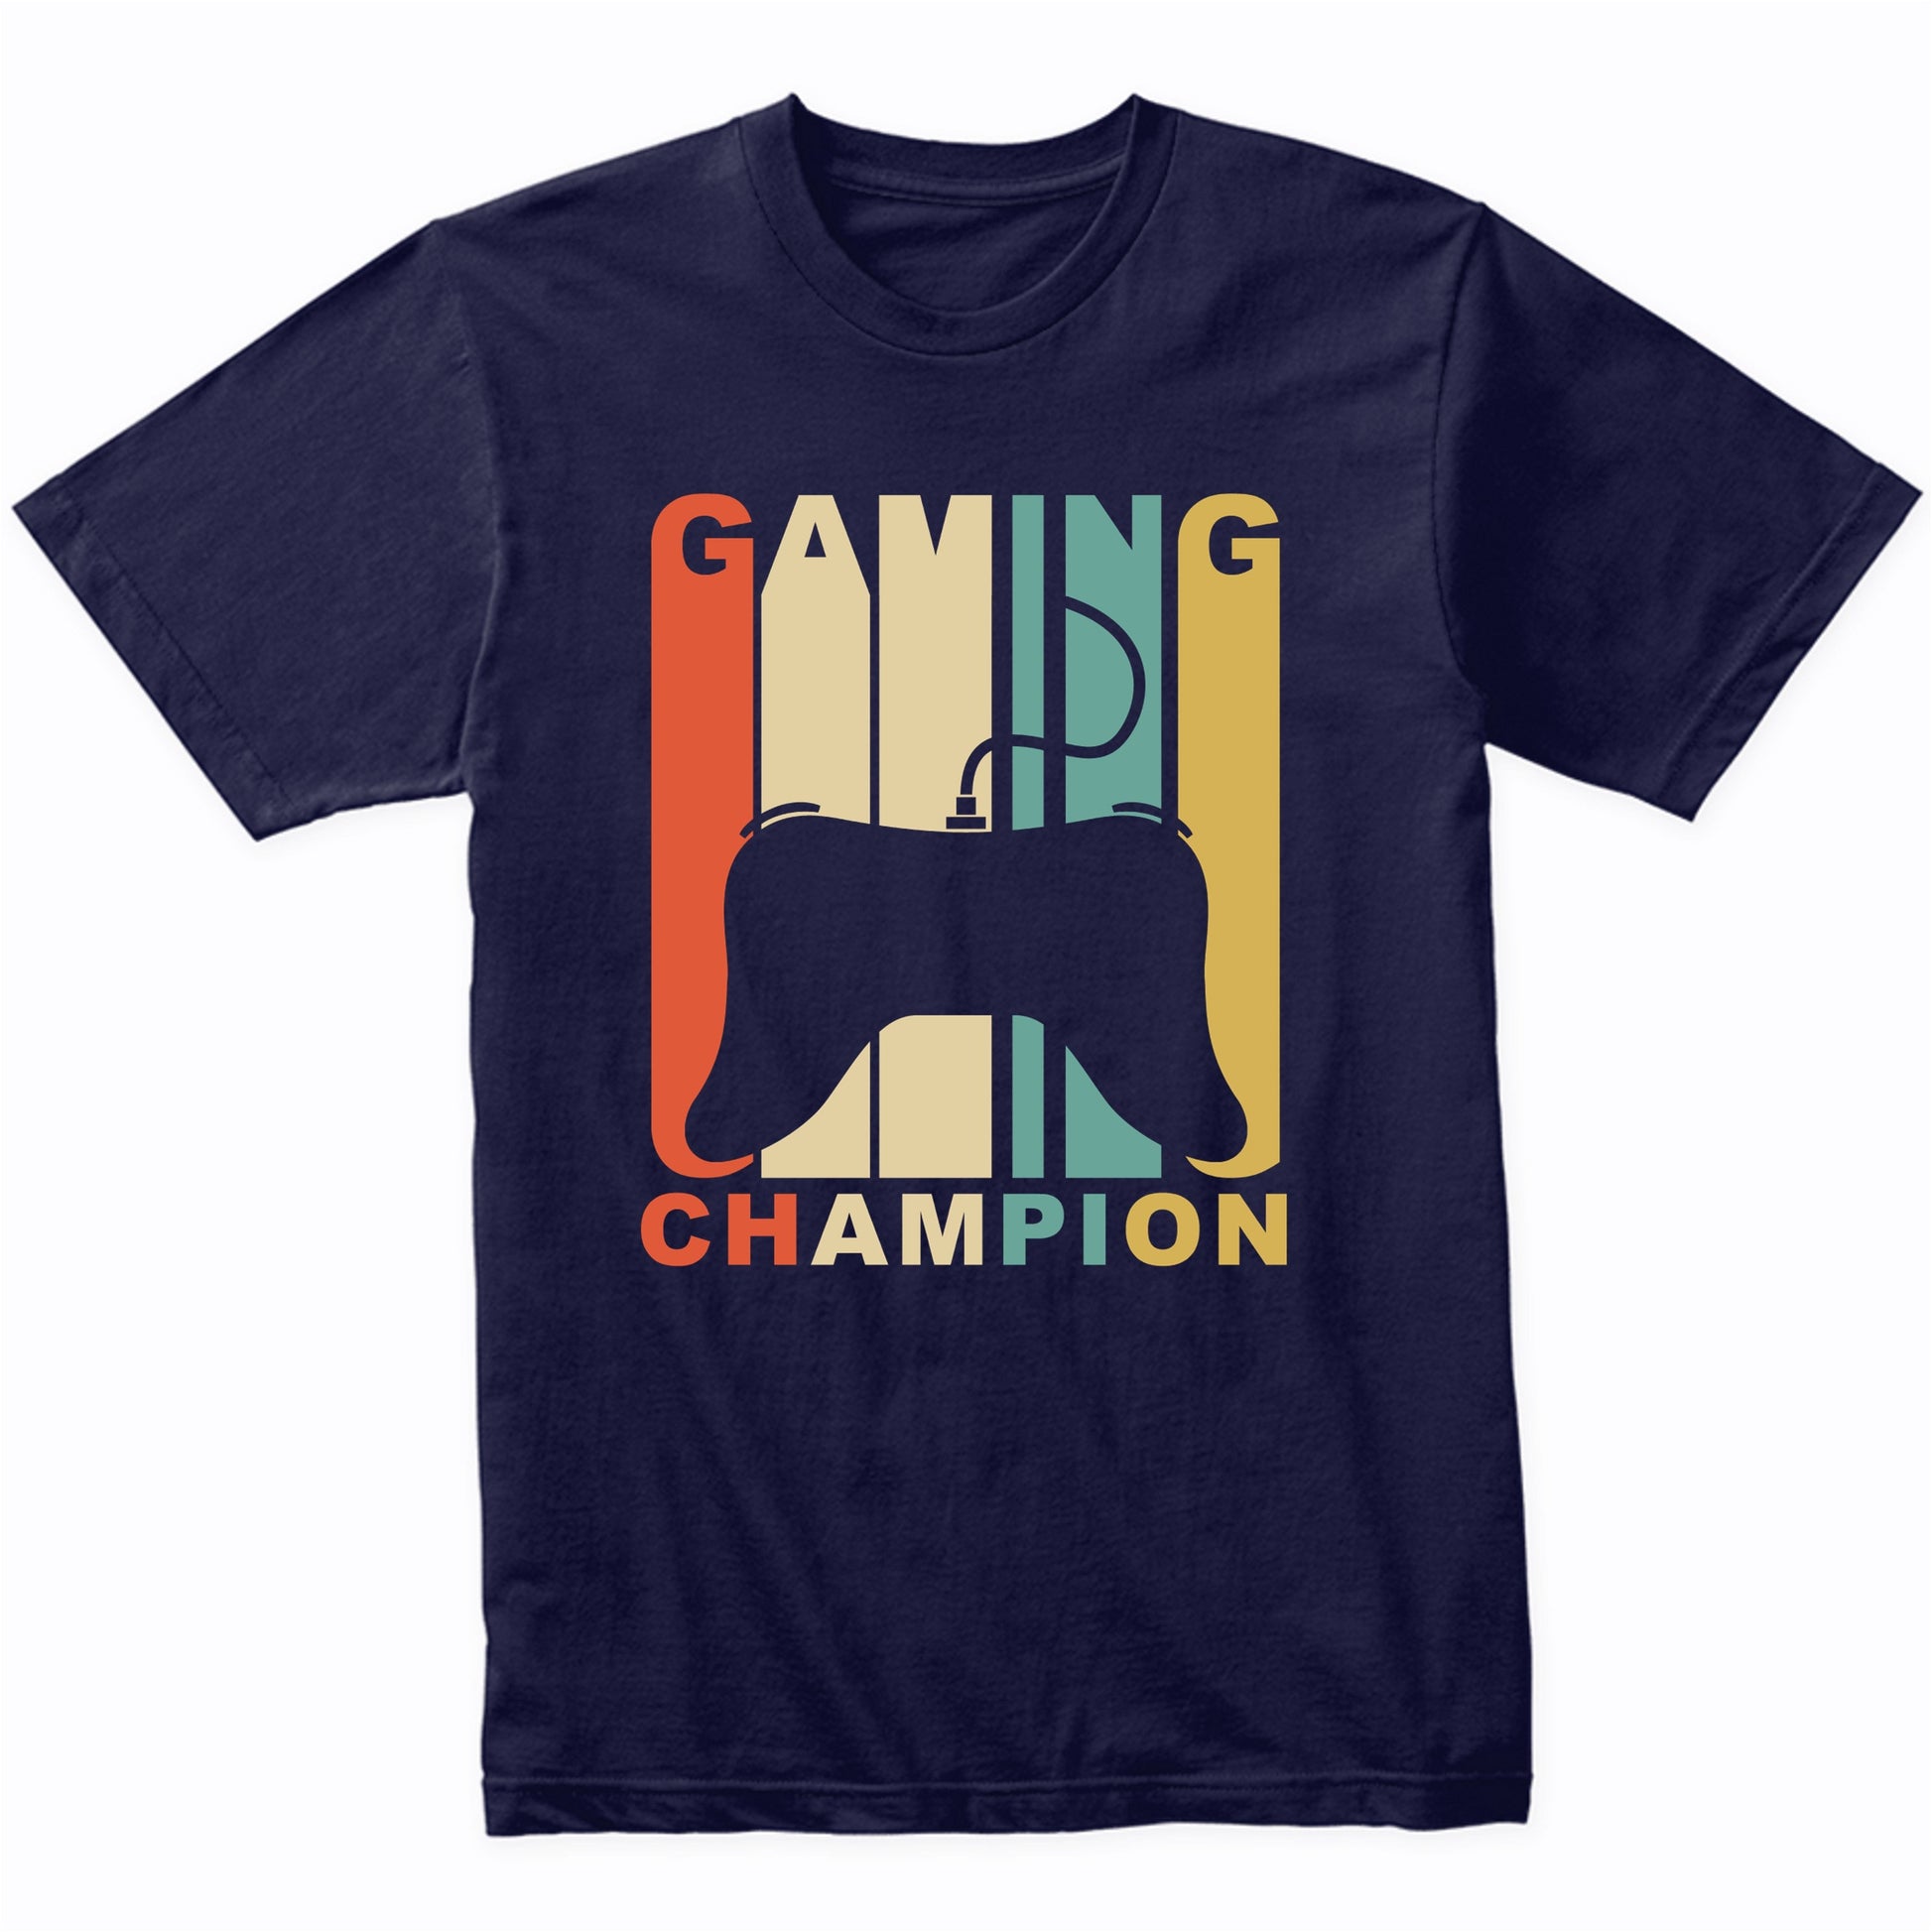 Vintage 1970's Style Gaming Champion Retro Gamer T-Shirt